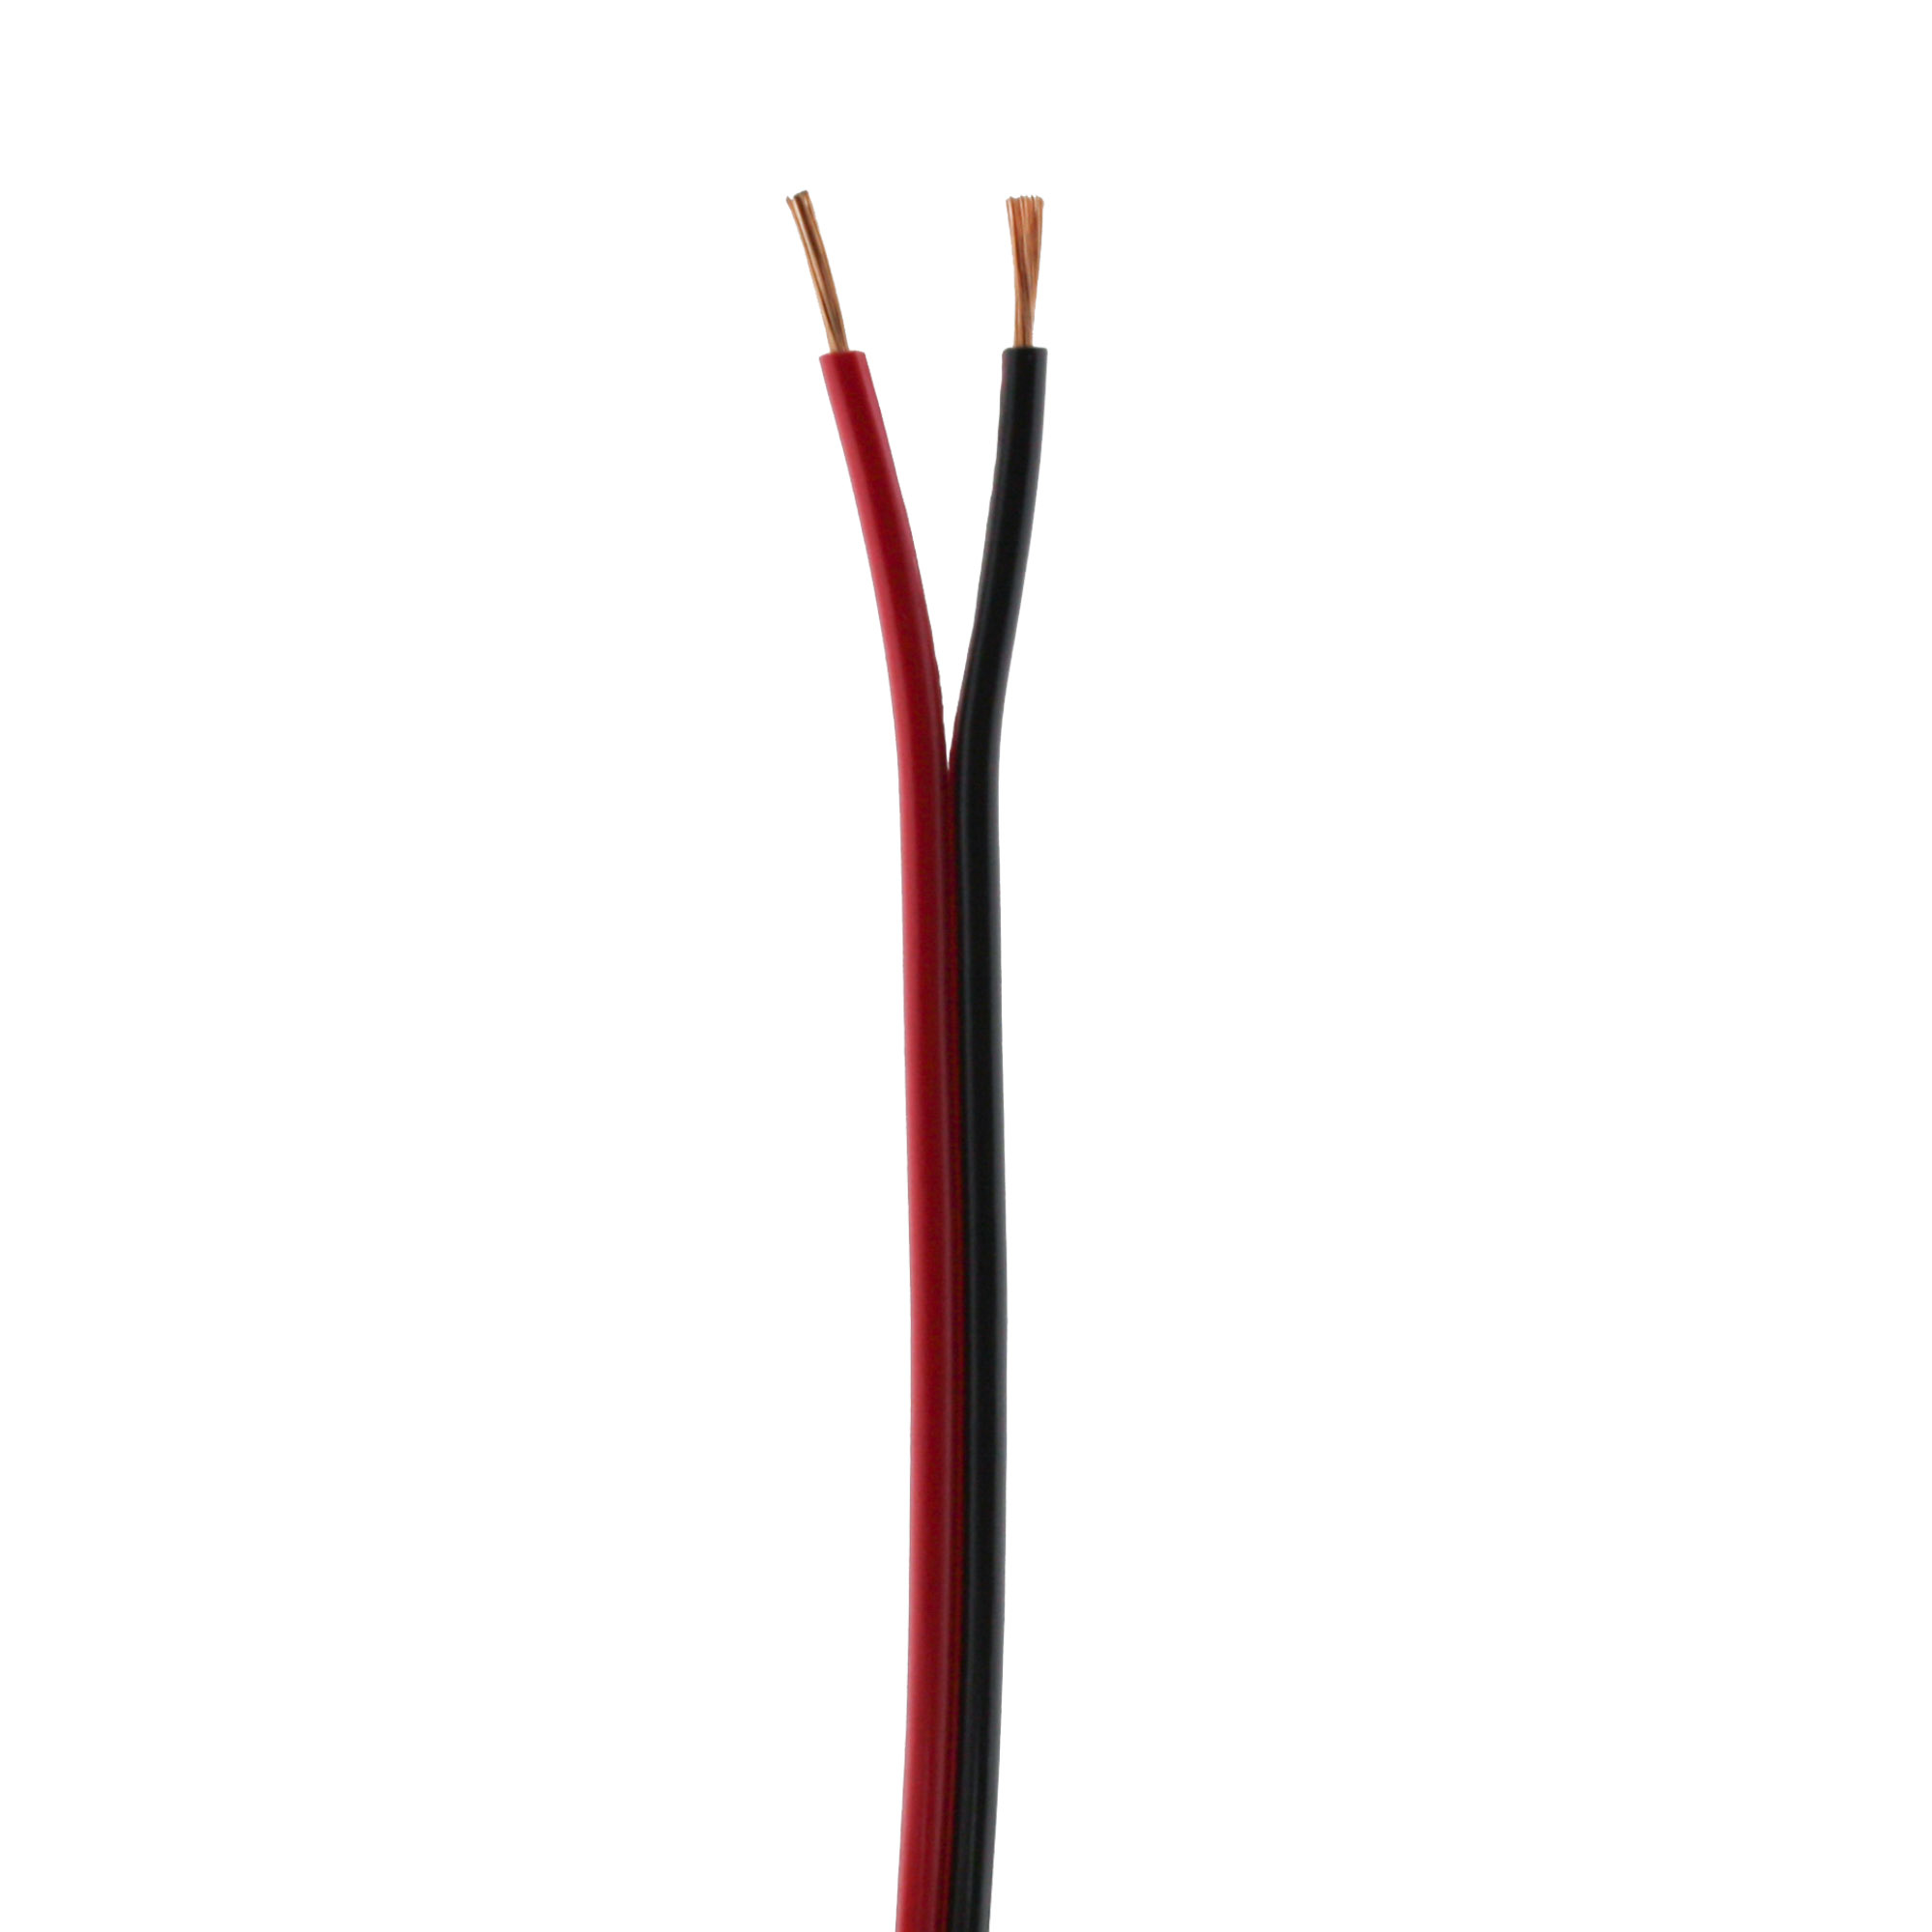 Loudspeaker cable red/black 100m 0.50mm